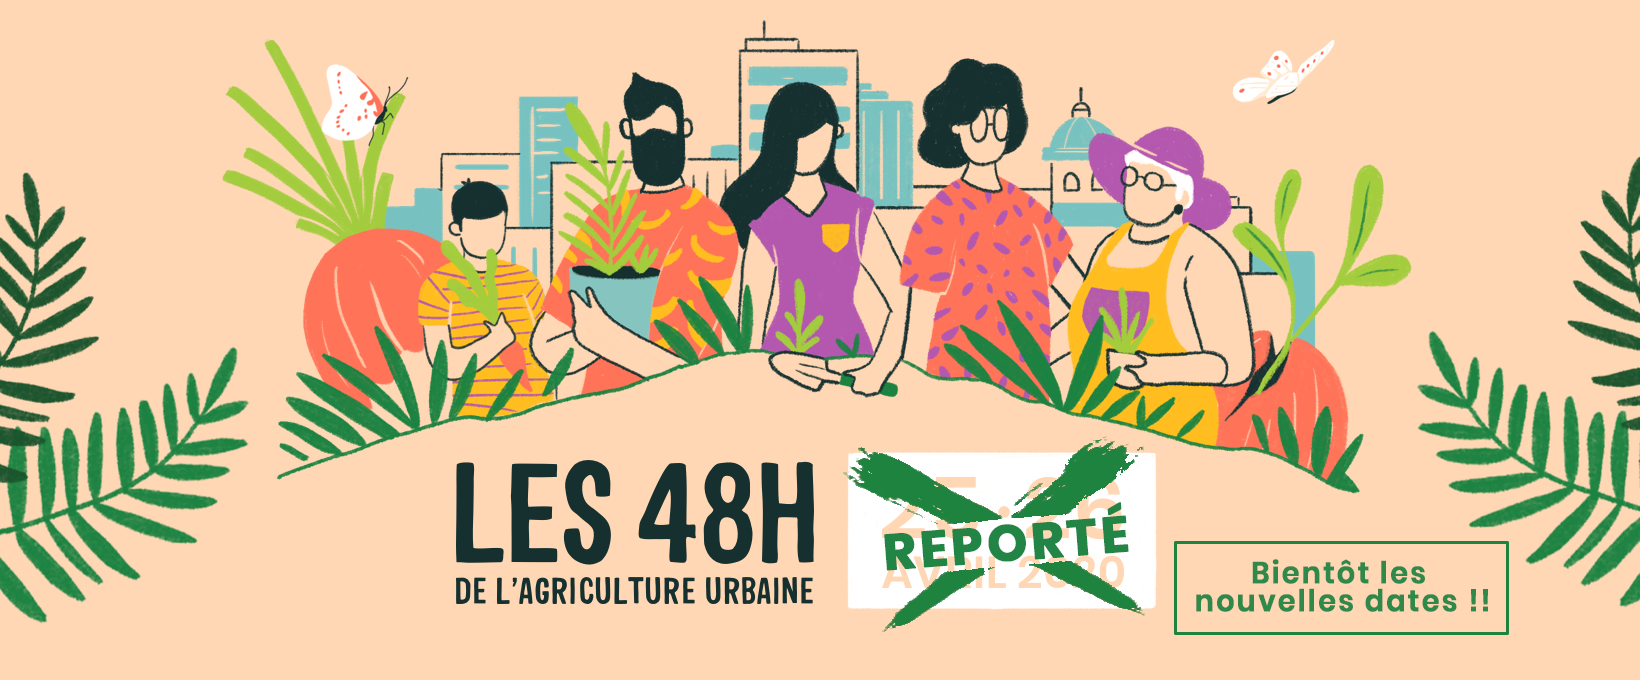 48h de l'agriculture urbaine - REPORT